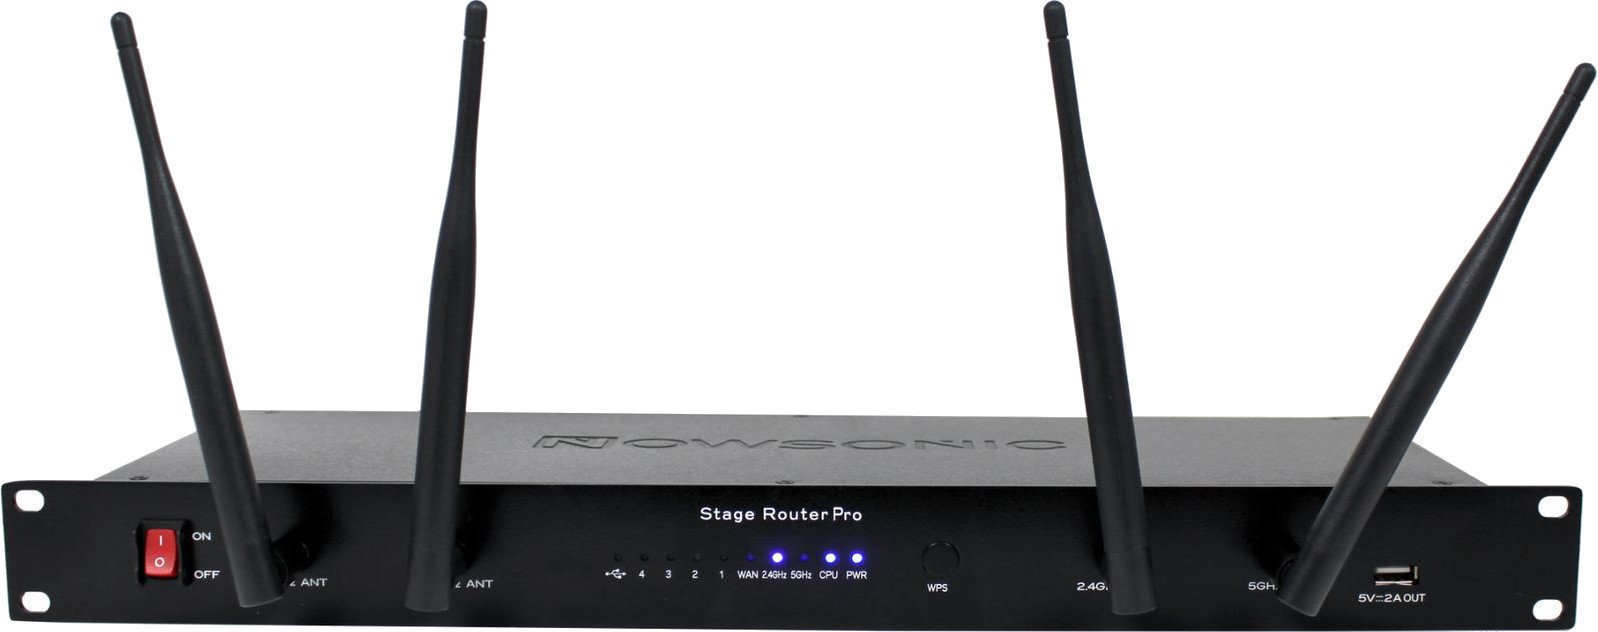 Splitter d'antenna per sistemi wireless Nowsonic Stage Router Pro